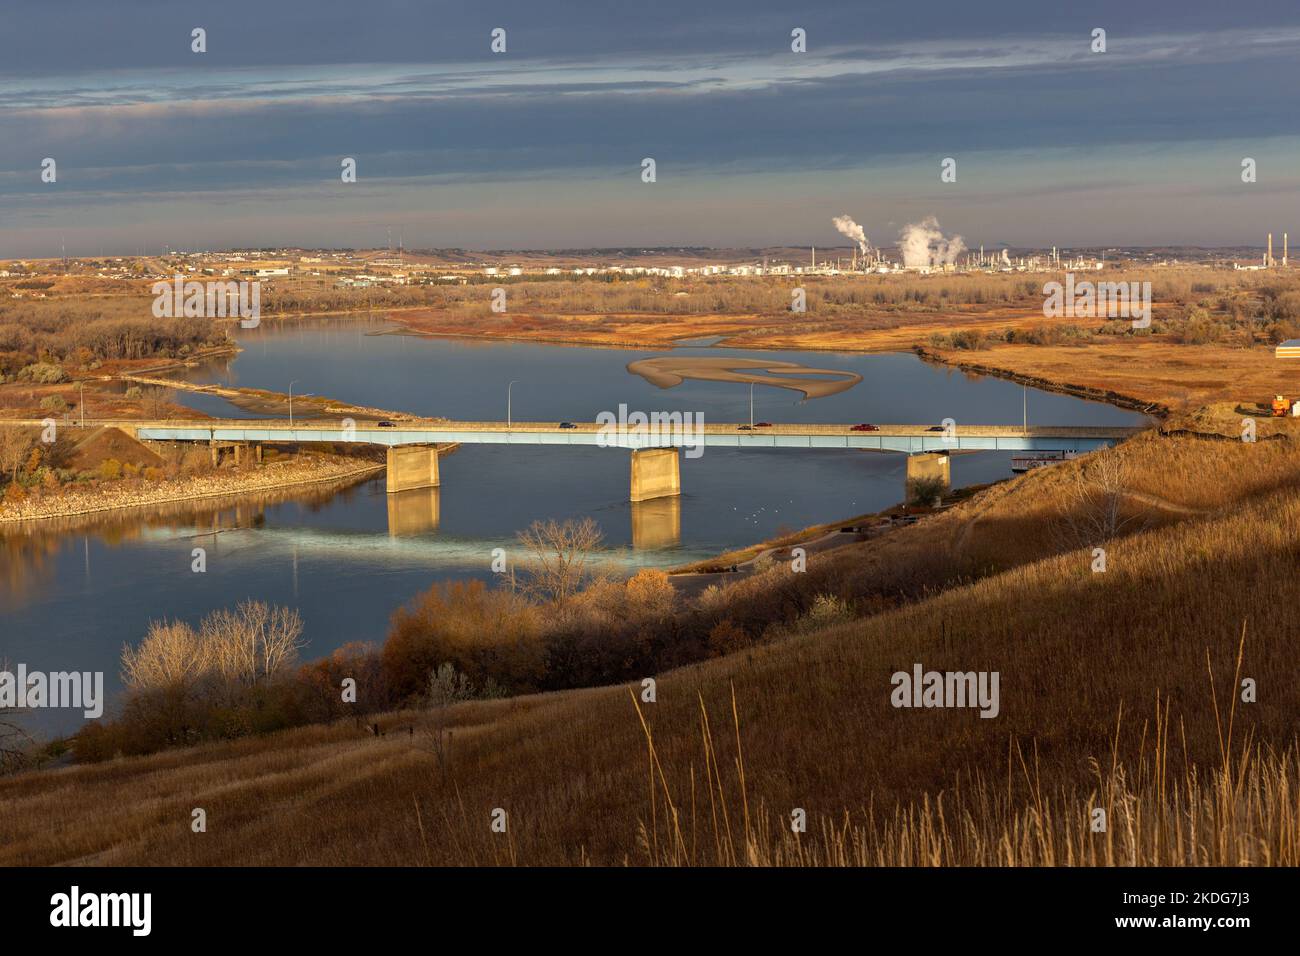 Interstate highway 94 Grant Marsh Bridge over the Missouri River between Bismarck and Mandan, ND.  The Marathon Oil Refinery is in the background. Stock Photo